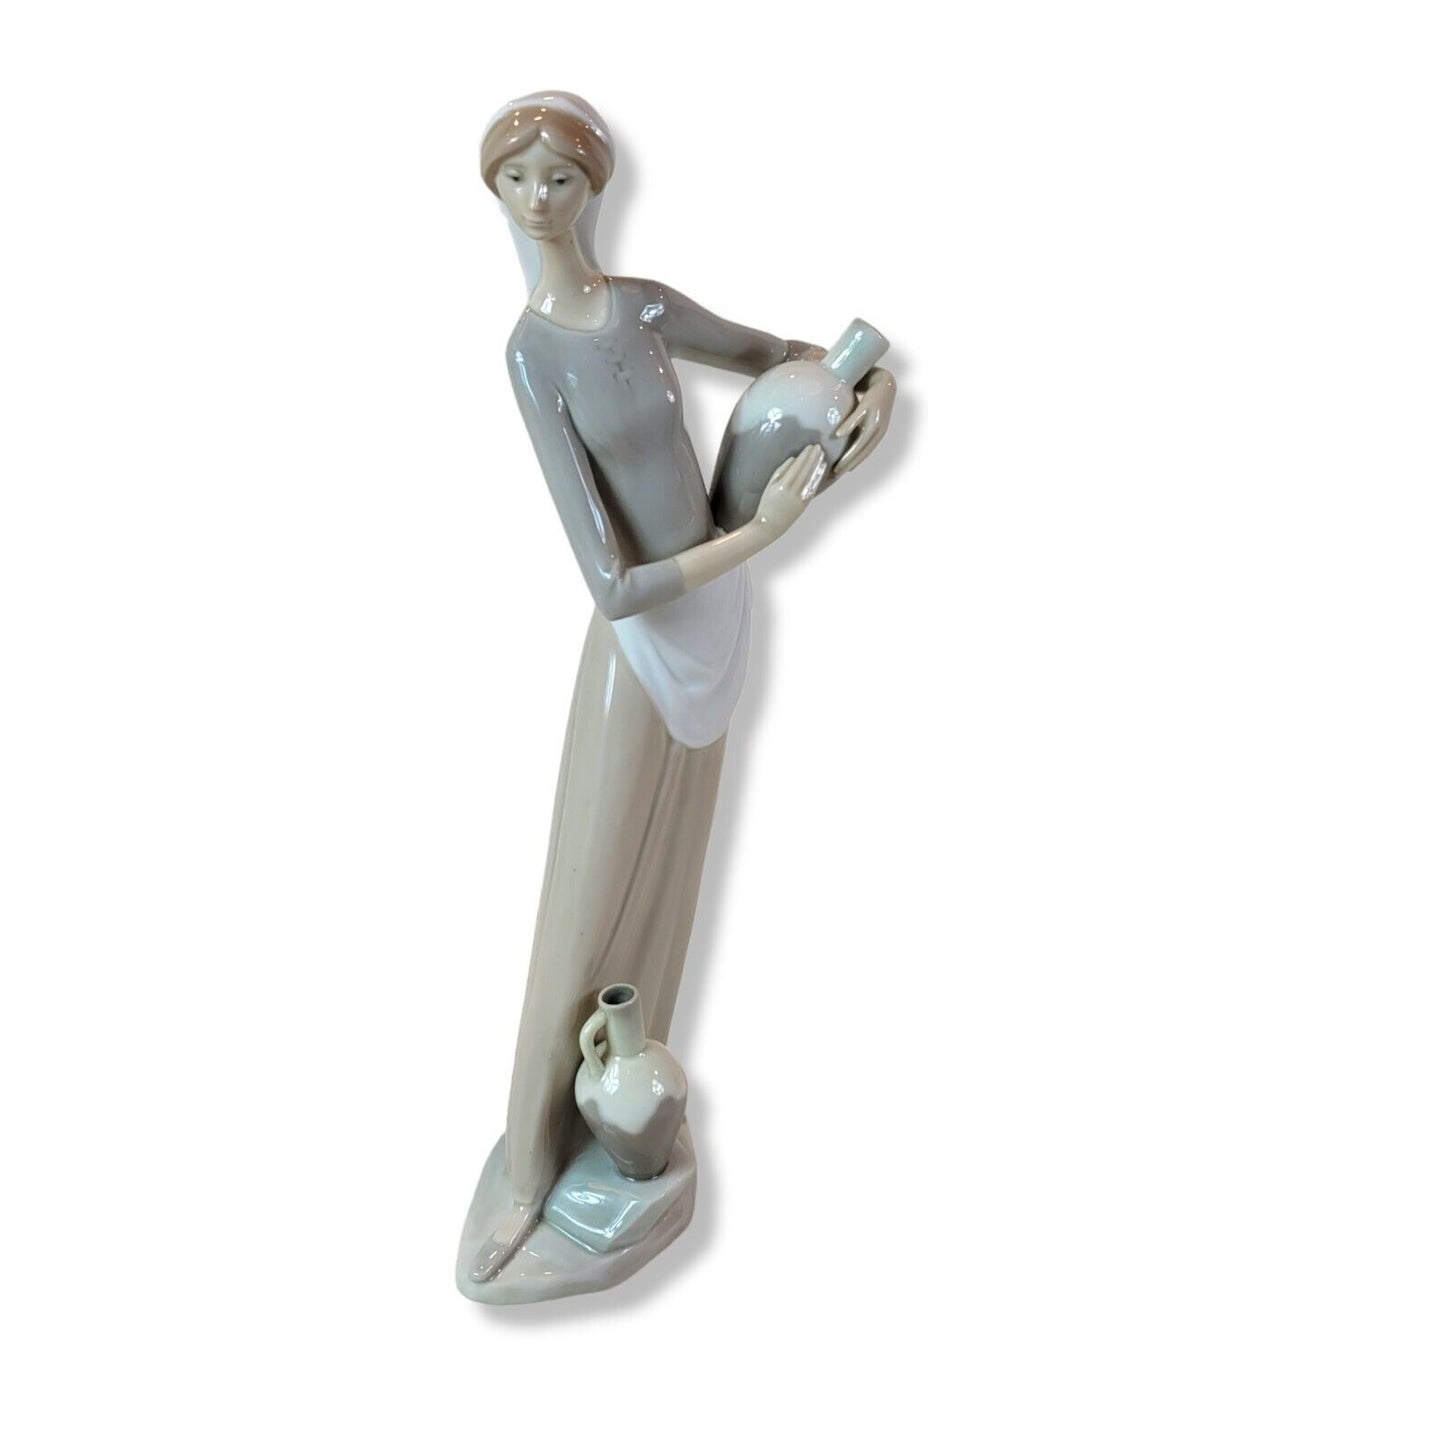 NAO LLADRO Tall Girl With Water Jugs Italian Figurine Sculpture 12-3/4" #4875